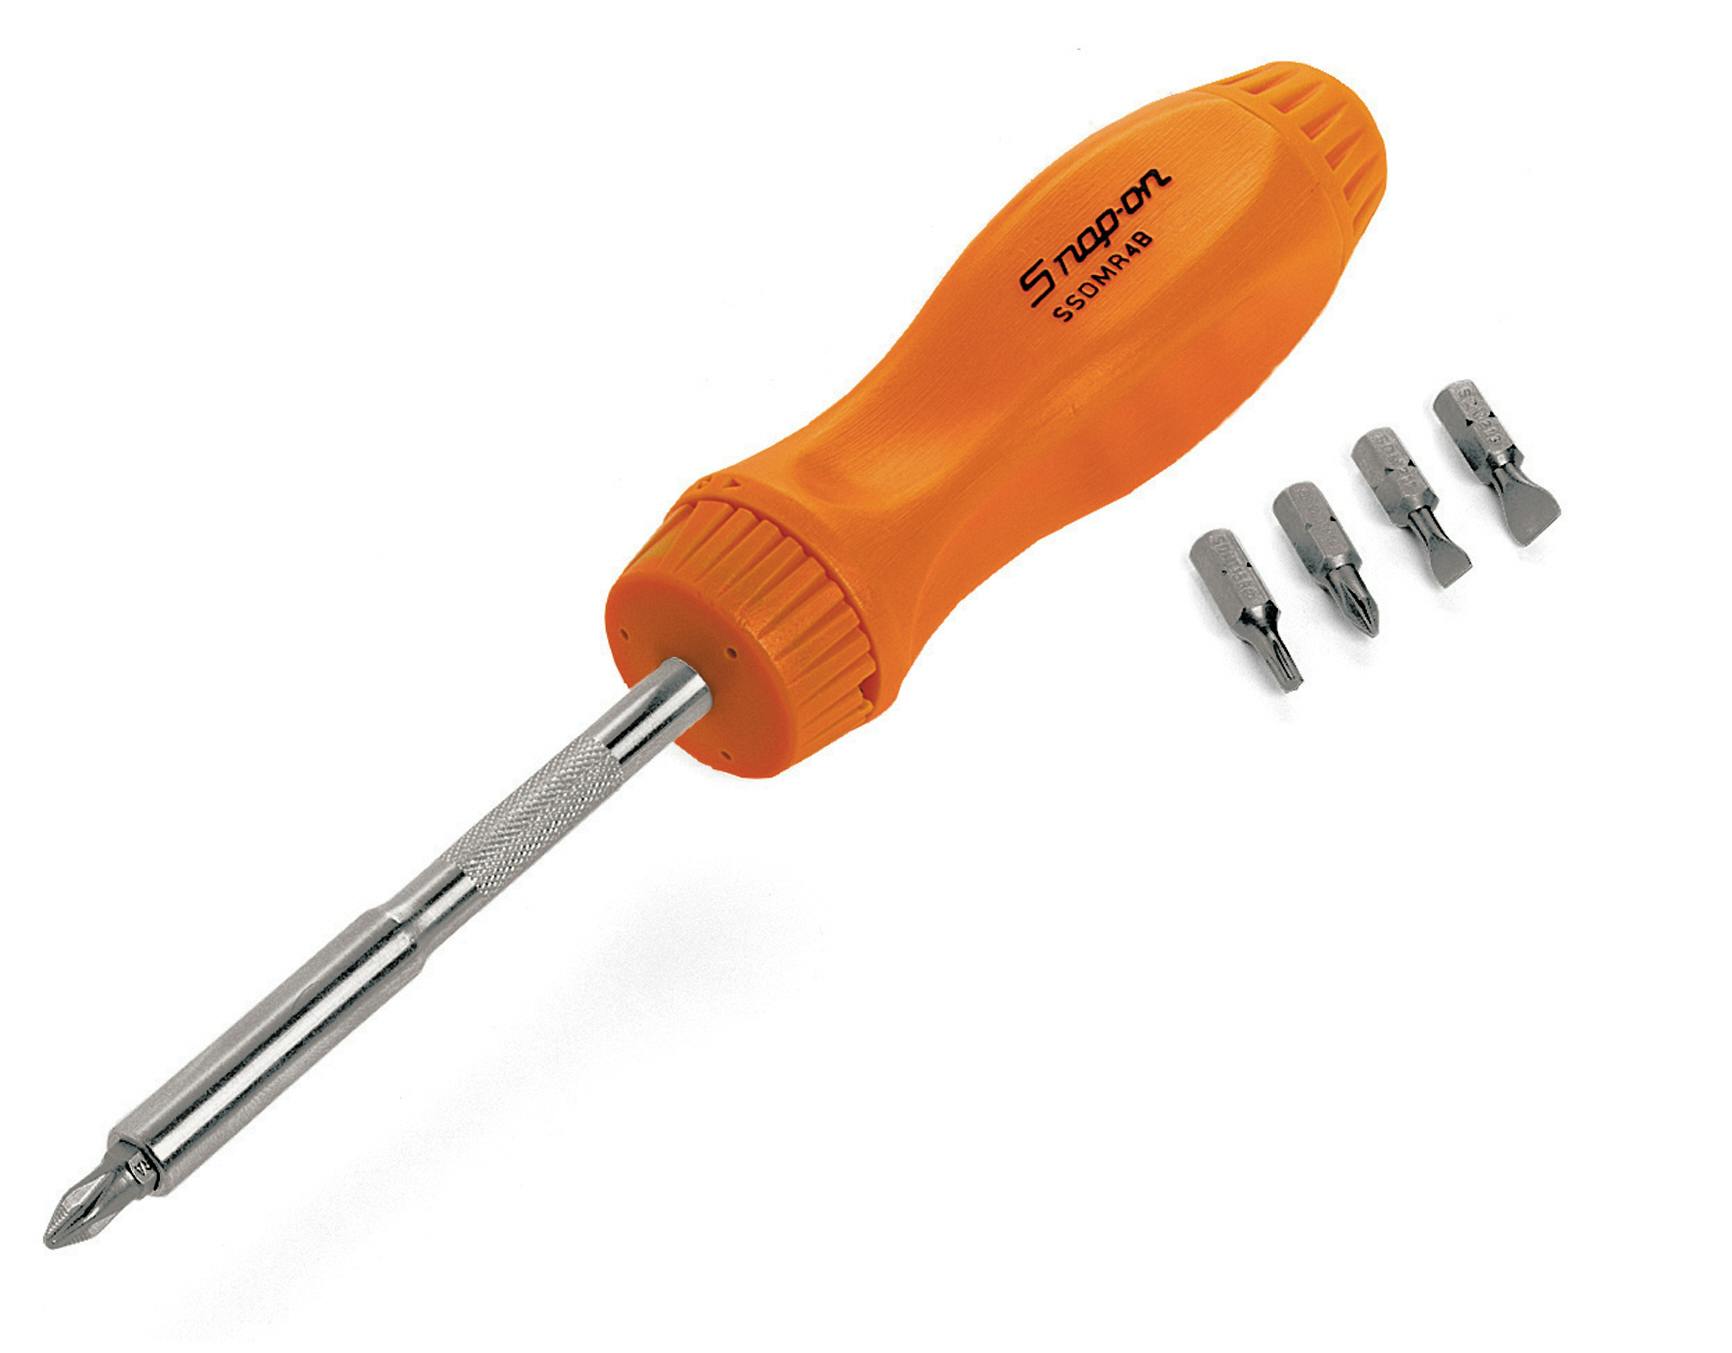 Snap-on Orange Handled Spring Tool 1/4” diameter shaft.